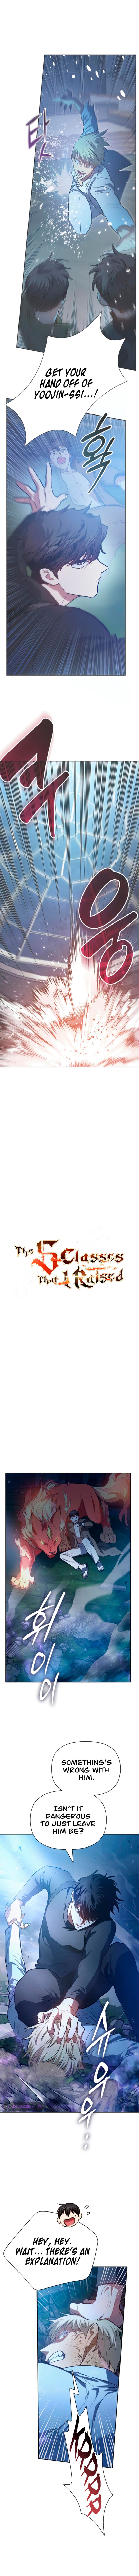 the_s_classes_that_i_raised_76_1